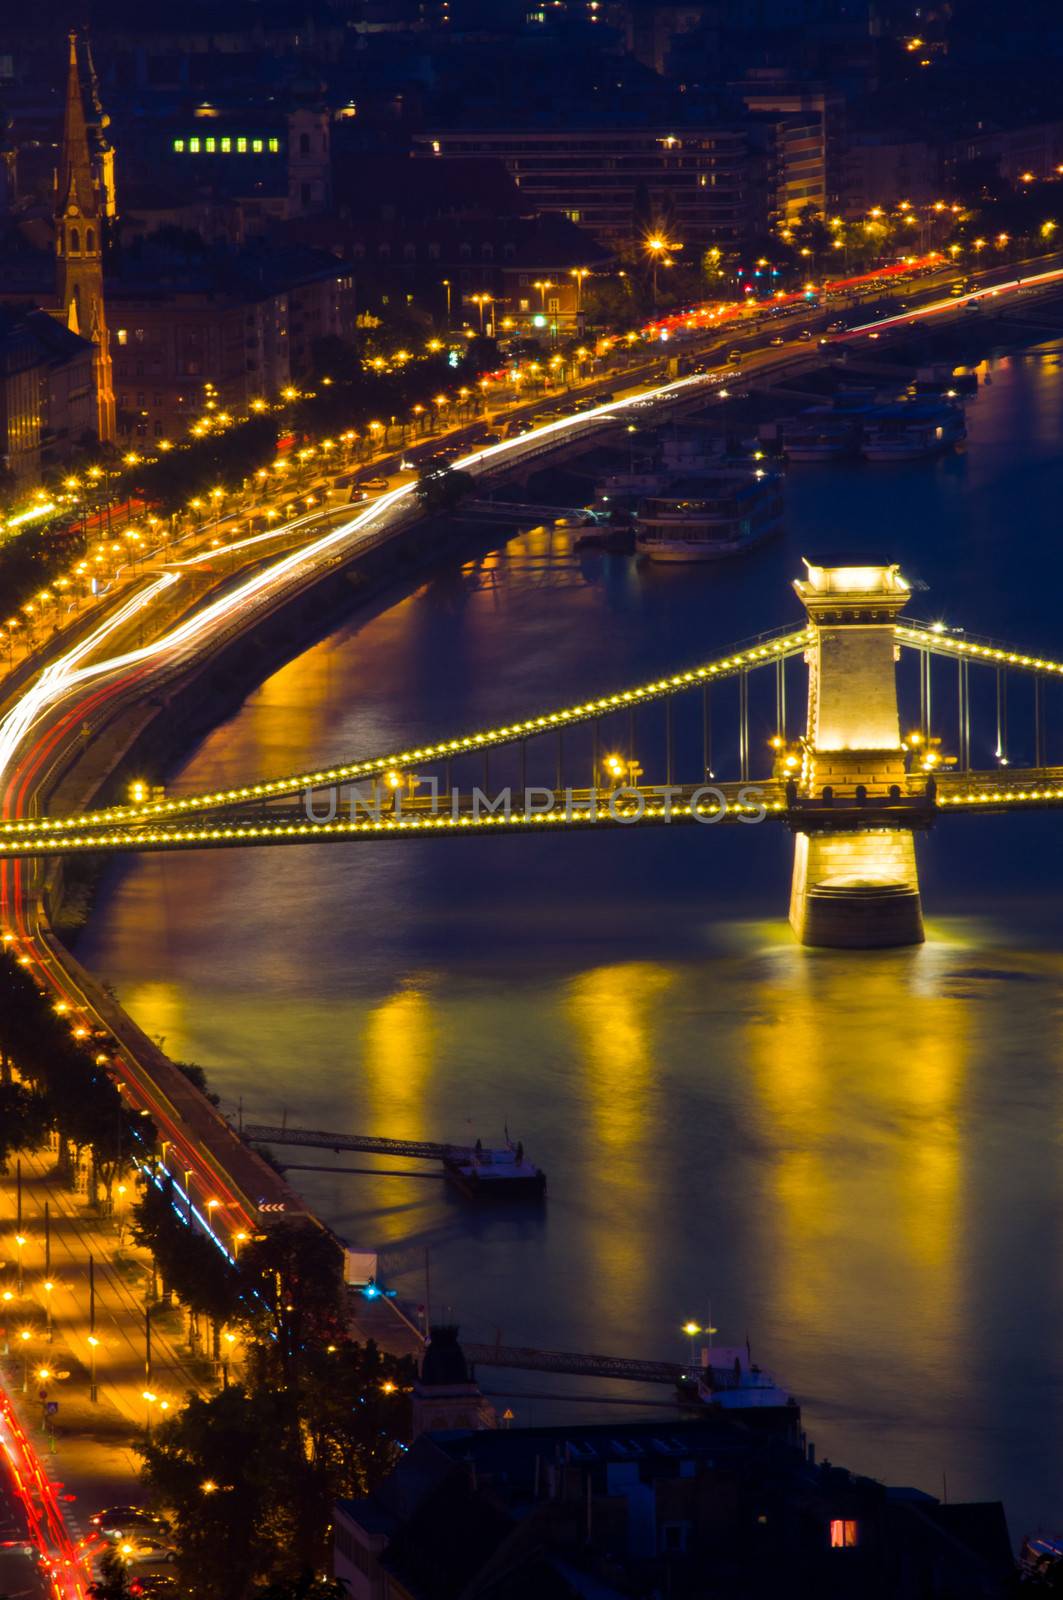 view of the illuminated Budapest at night